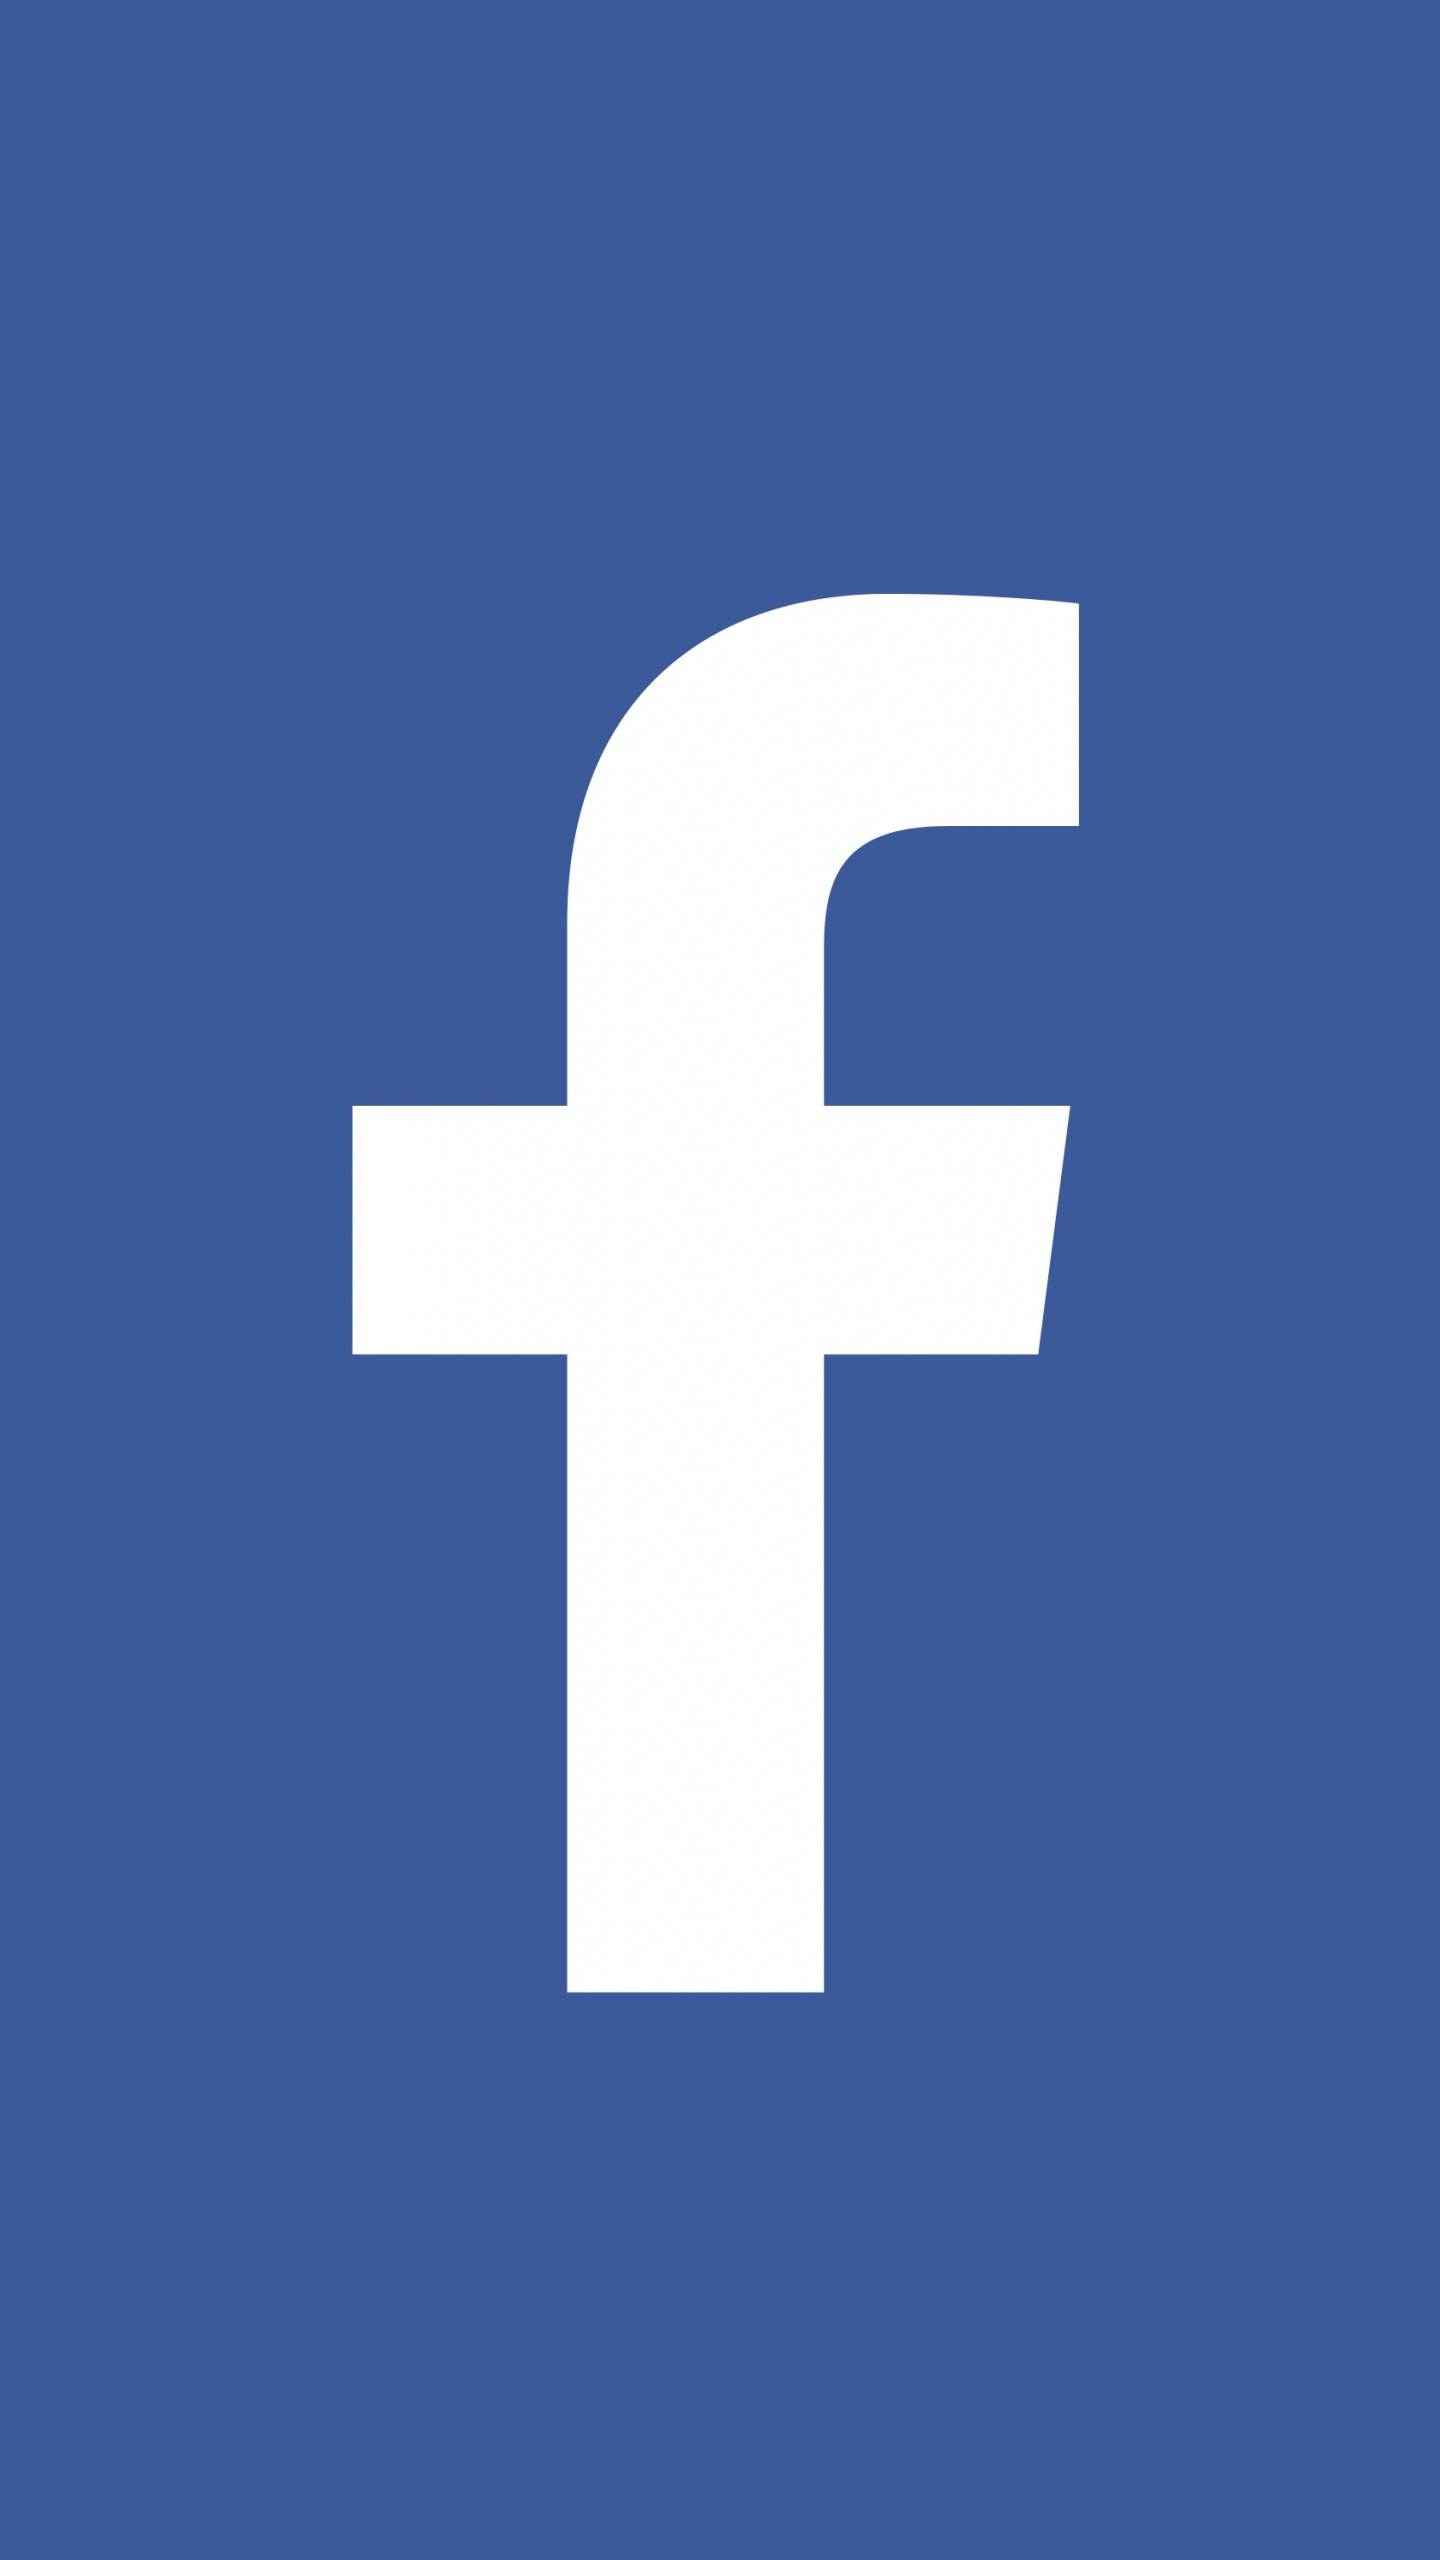 Facebook, Firmenzeichen, Text, Brand, Social-Media-Manager. Wallpaper in 1440x2560 Resolution